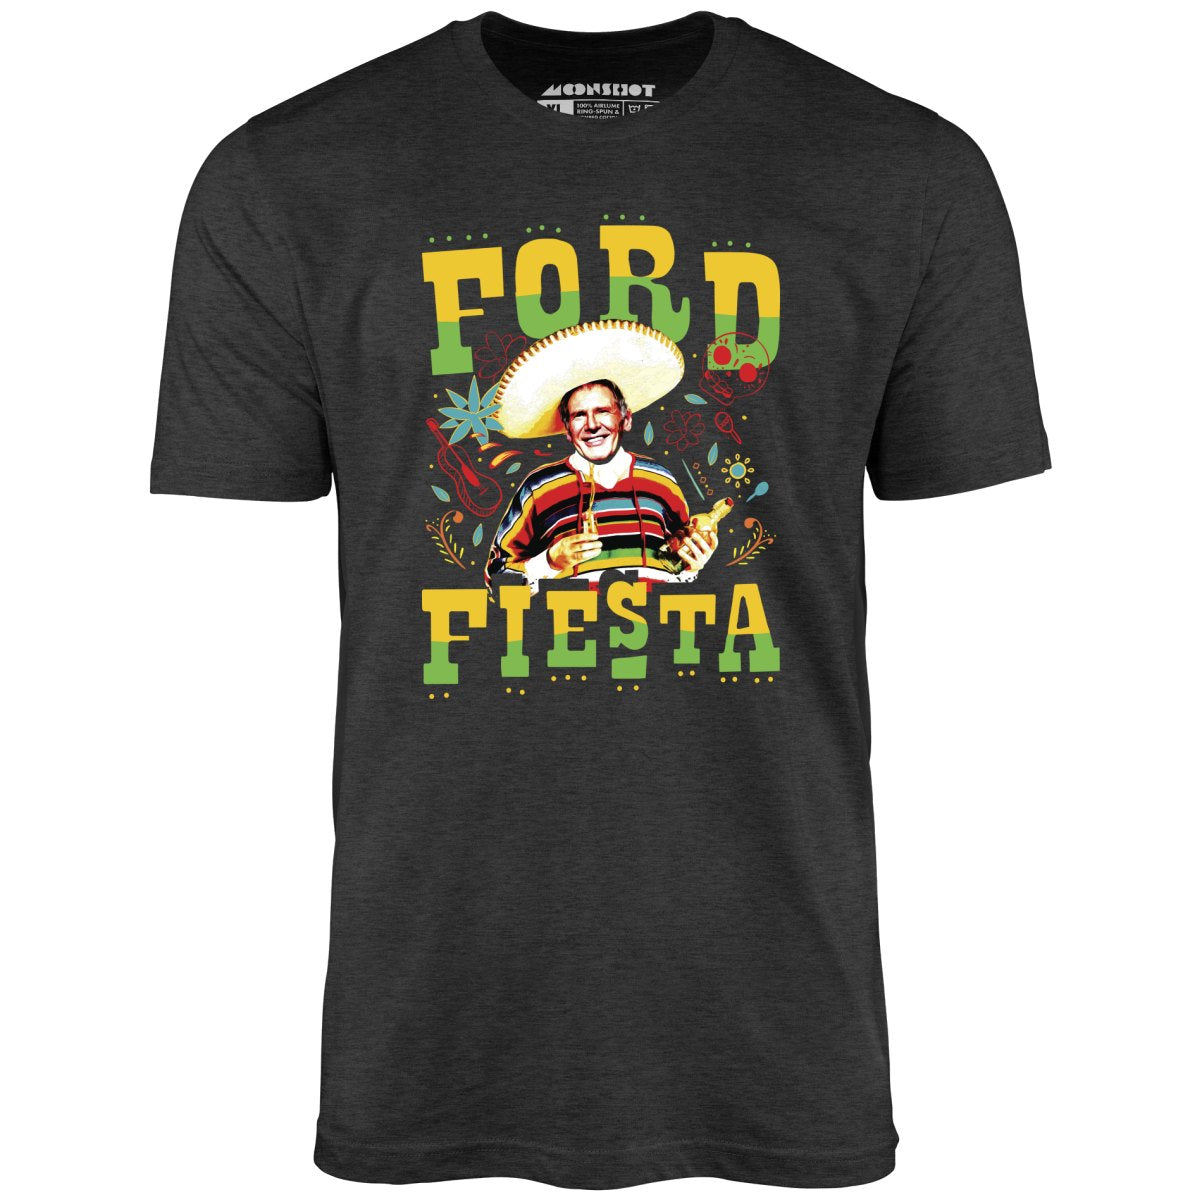 Ford Fiesta - Unisex T-Shirt